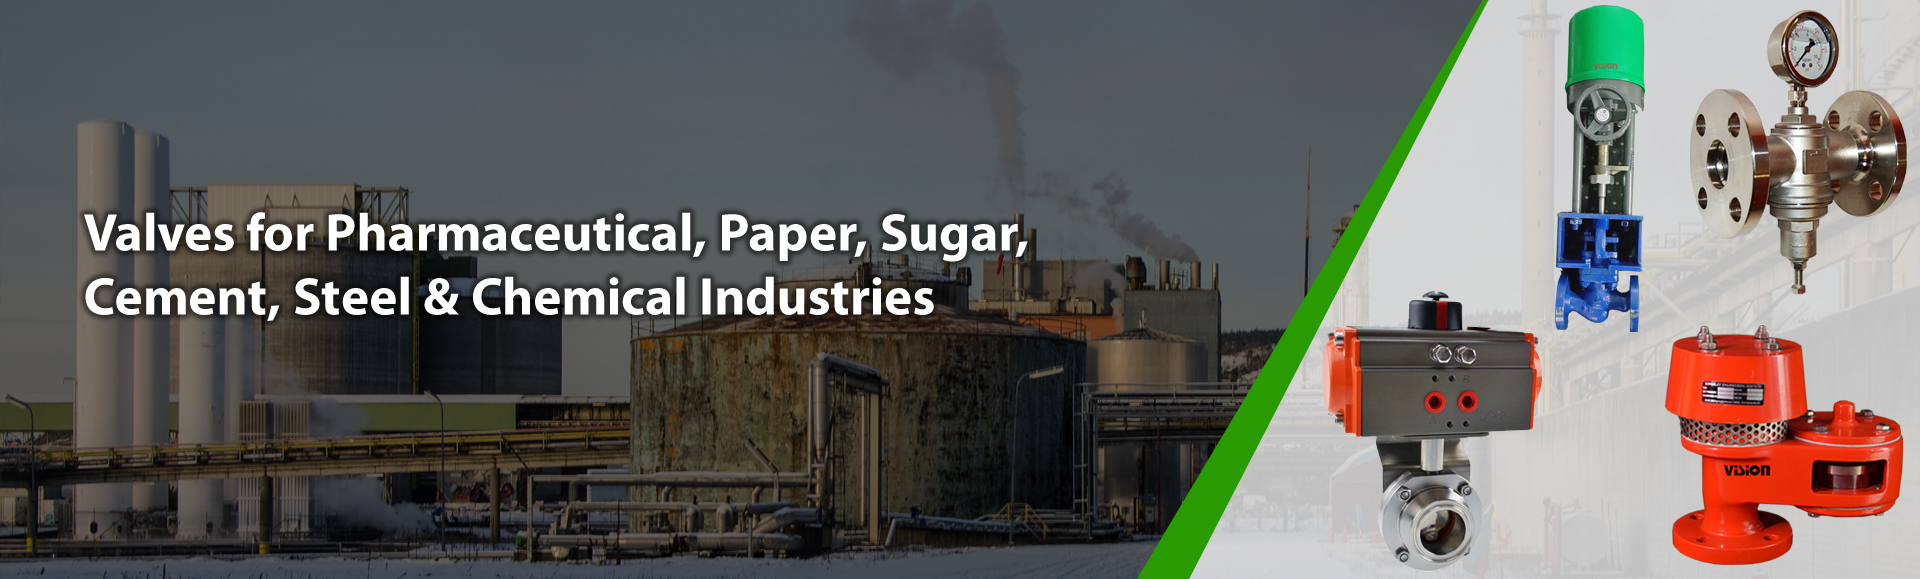 valves for sugar industries